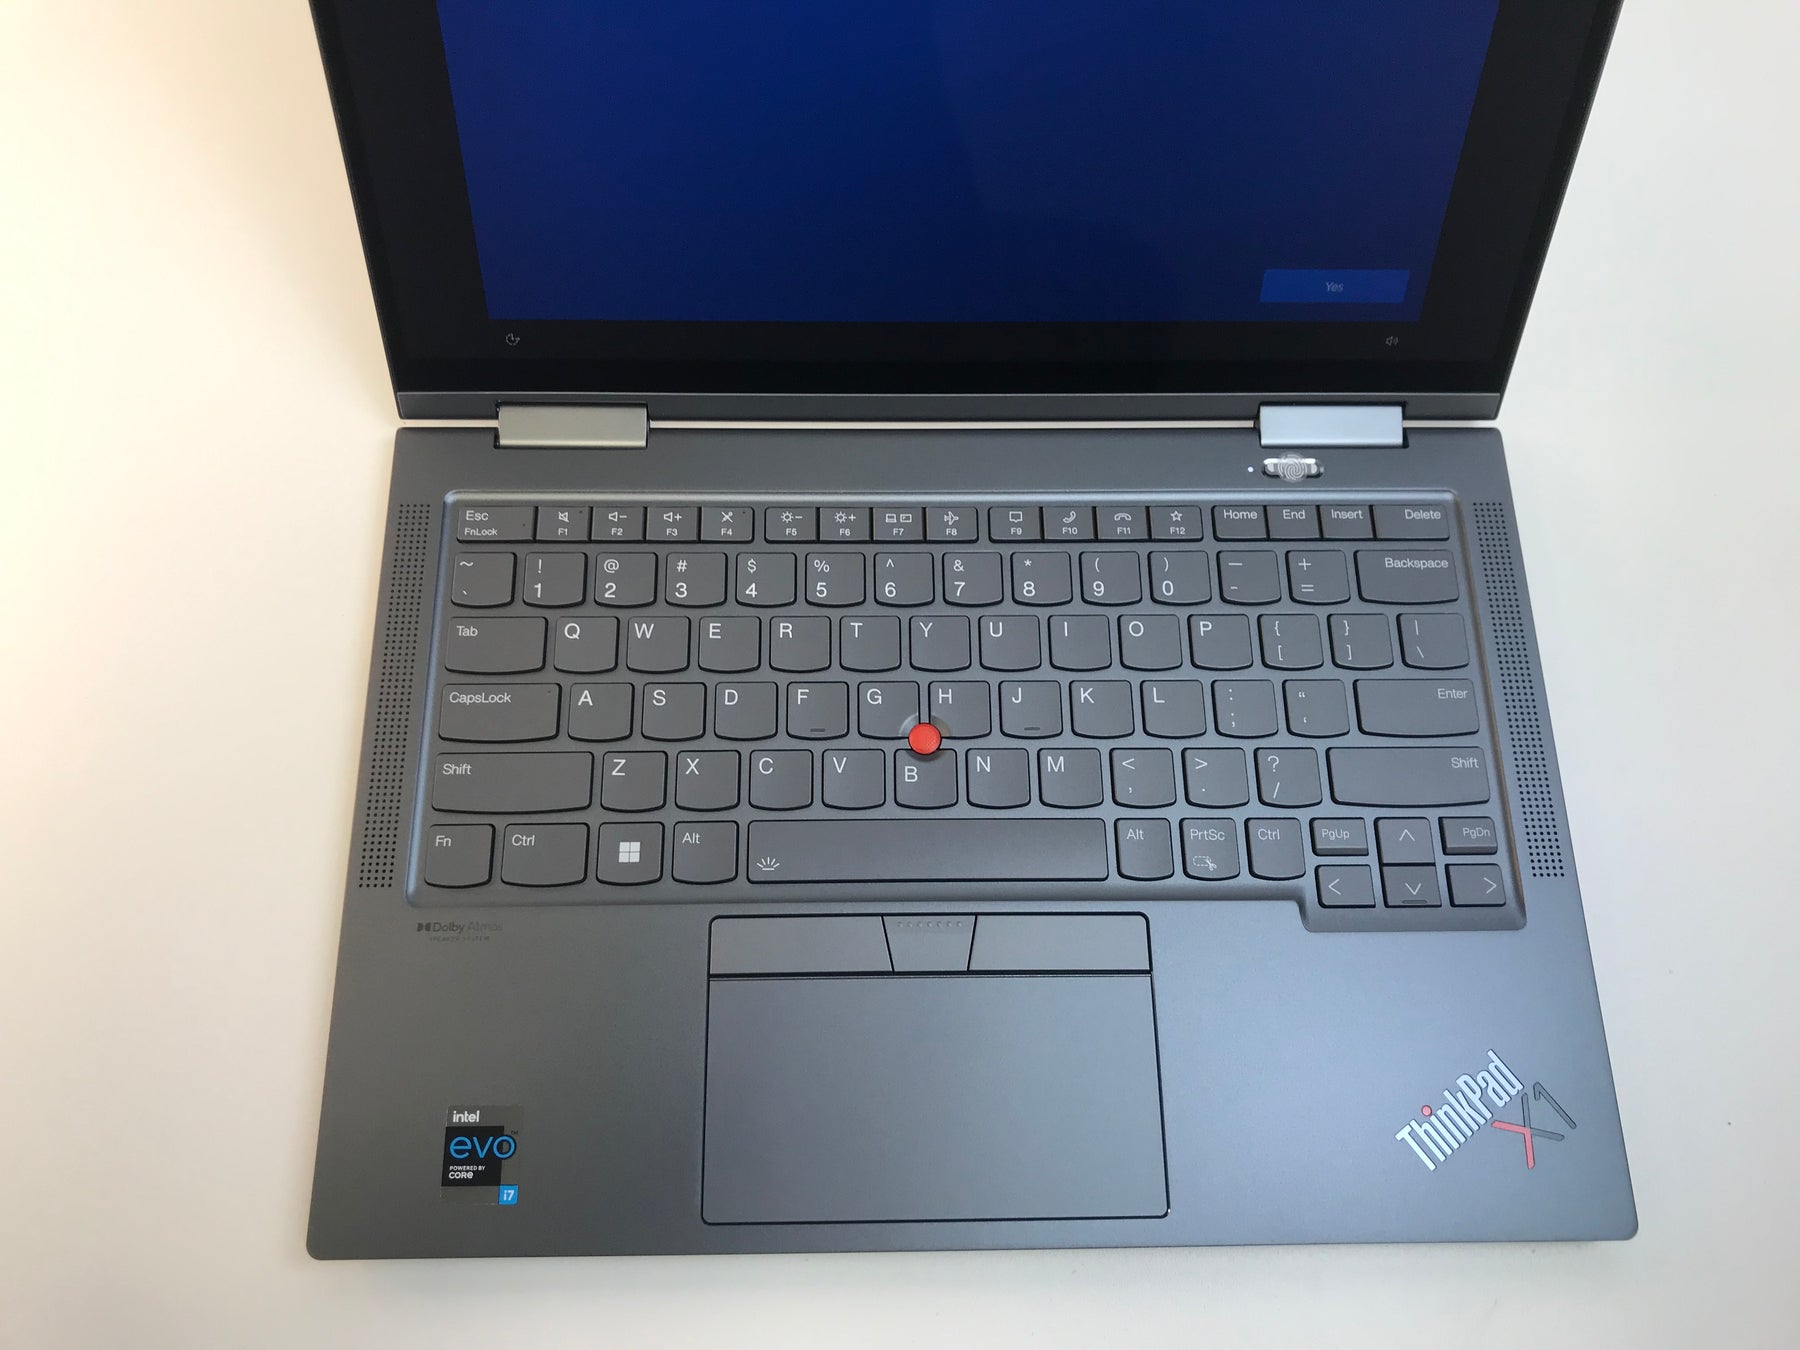 Lenovo ThinkPad X1 Yoga G6 20XY002RUS 14" Notebook - i7 - 8GB RAM - 256GB SSD